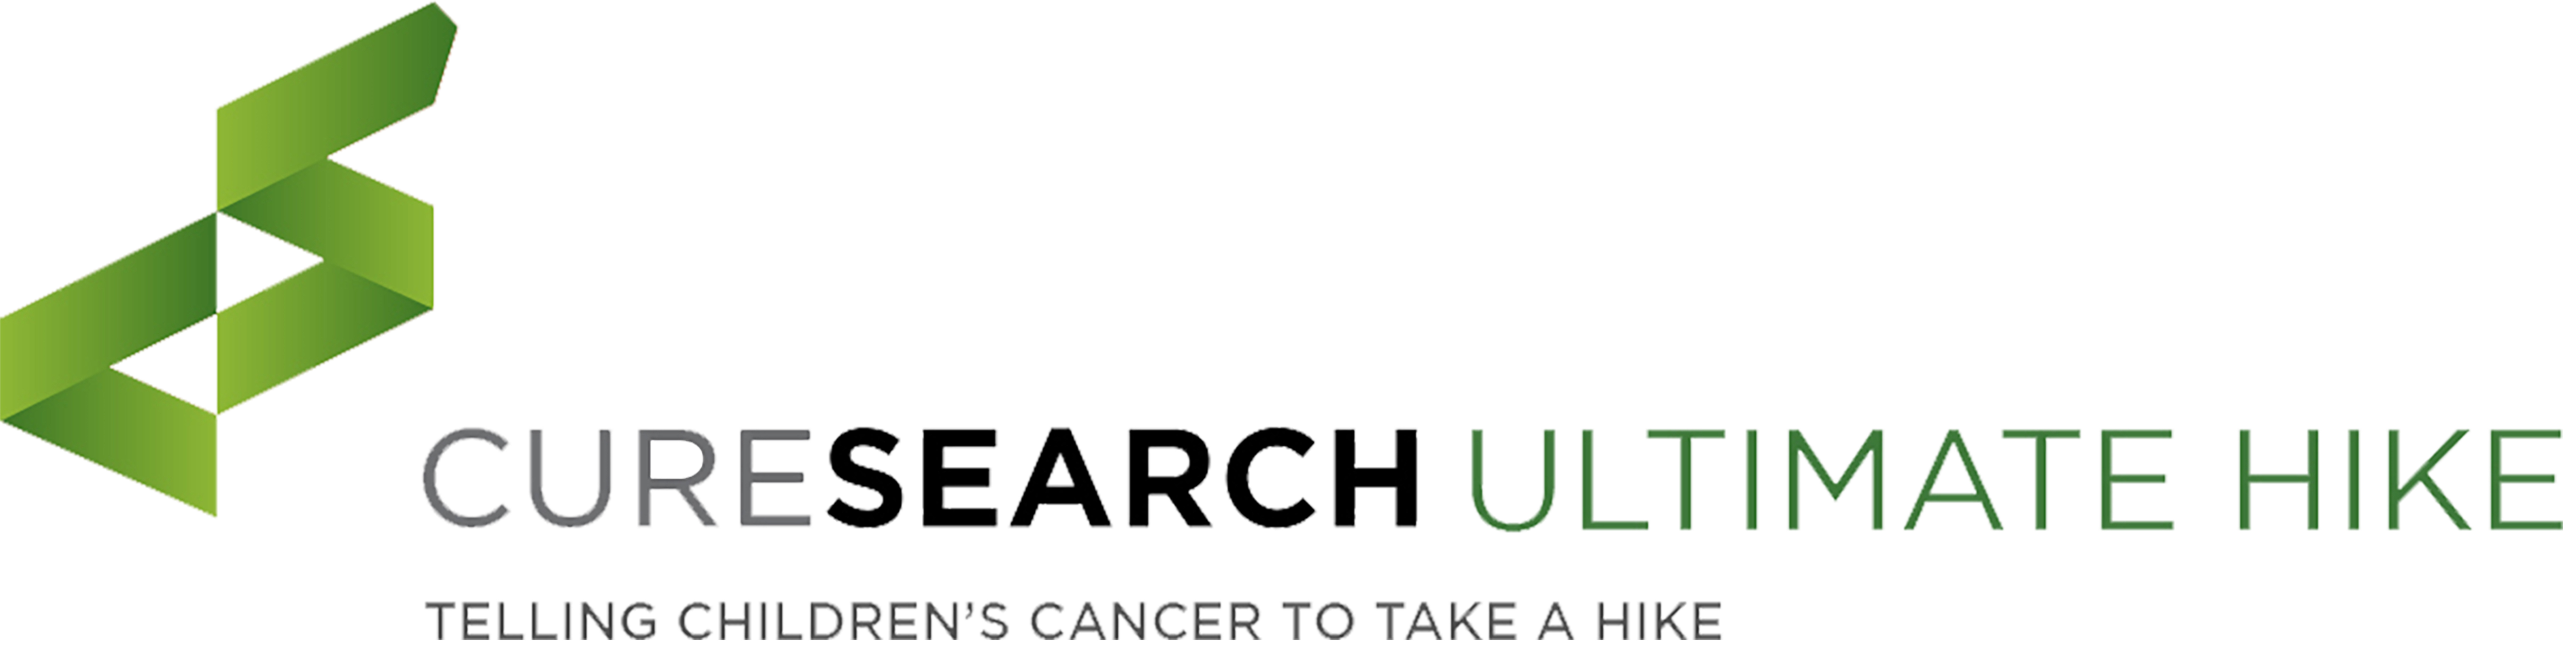 2021_CureSearch_Ultimate_Hike_Logo_Horiztonal